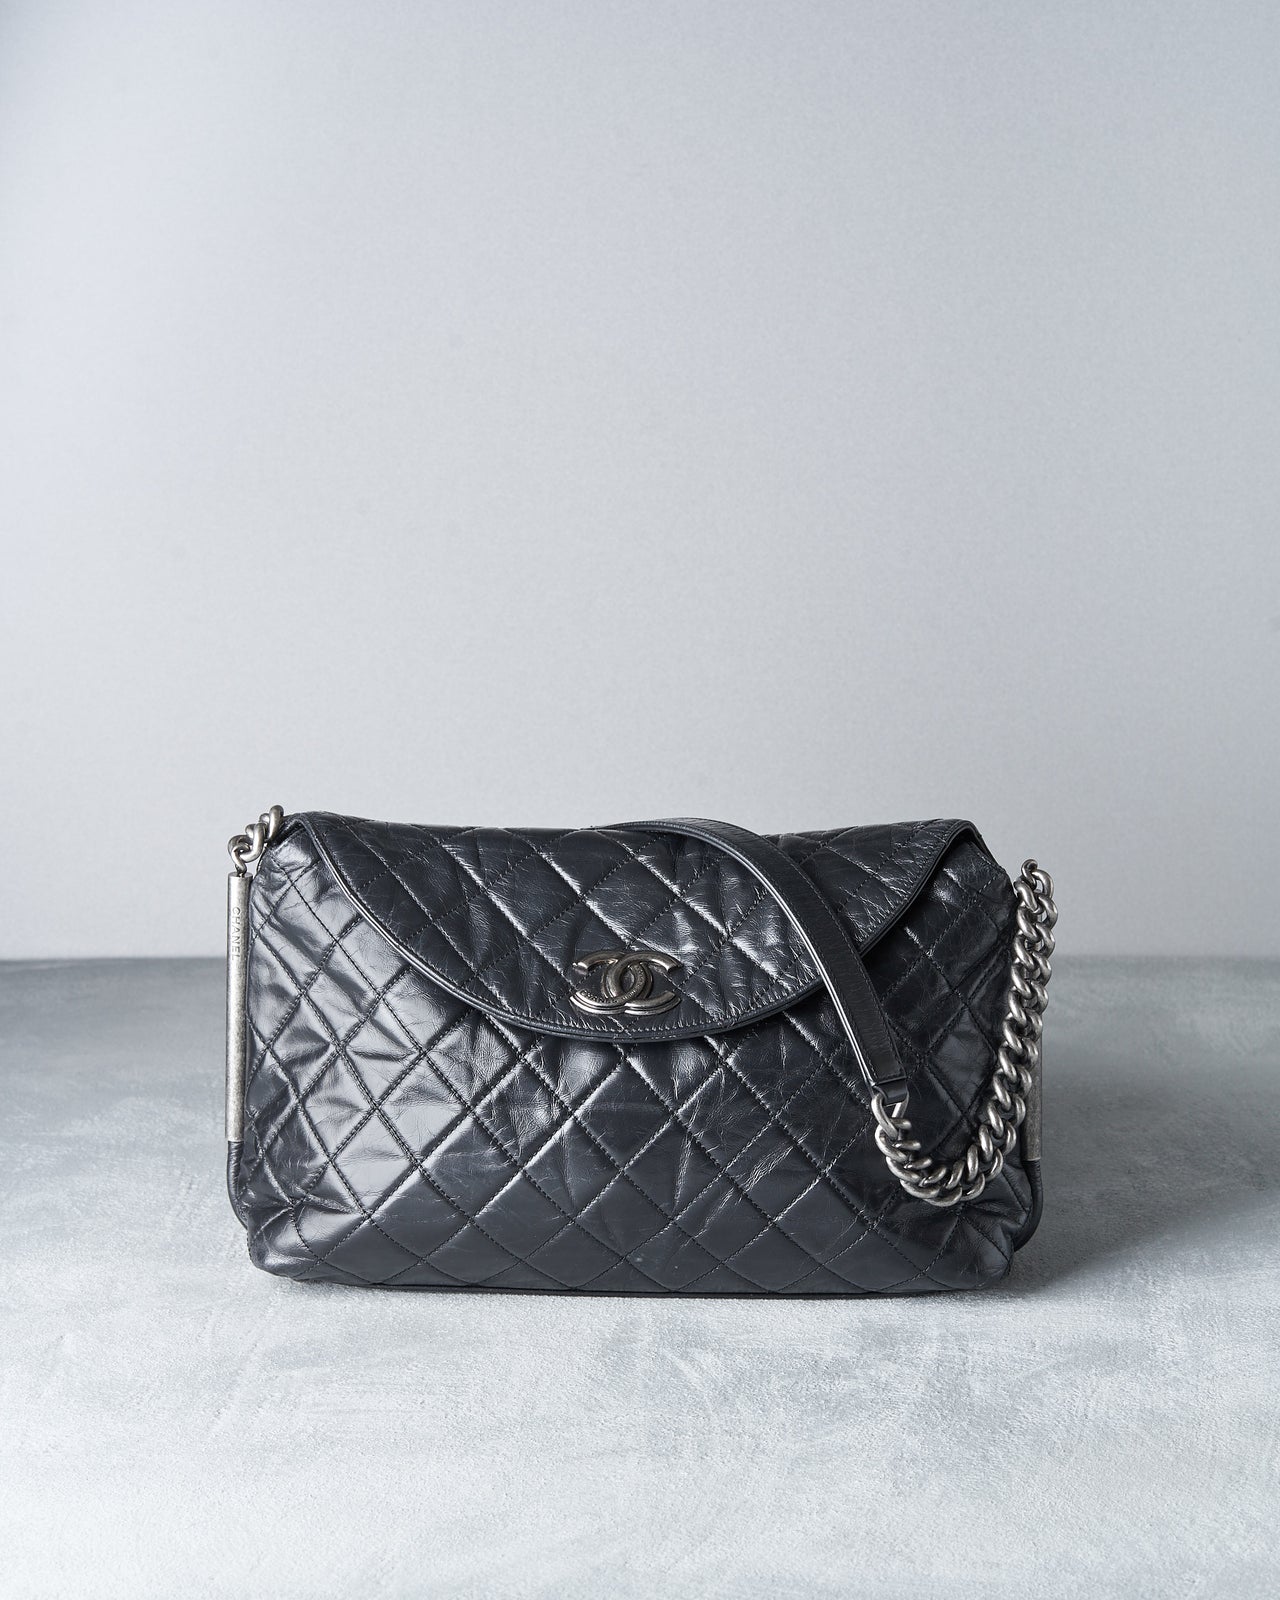 Chanel 2012 crackle leather flap shoulder bag with Ruthenium hardware